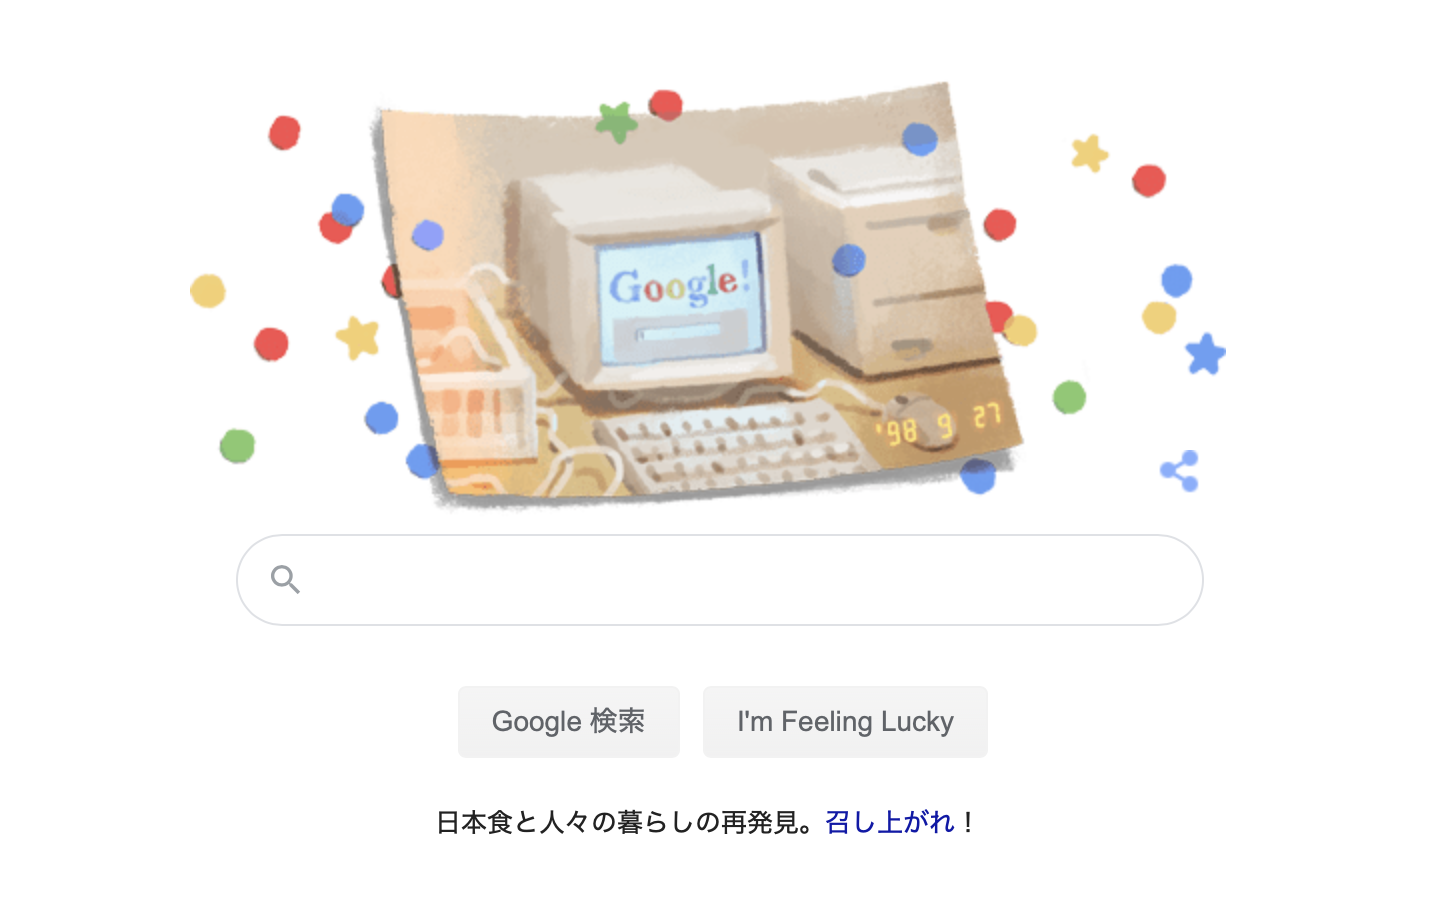 Google様、お誕生日おめでとうございます。